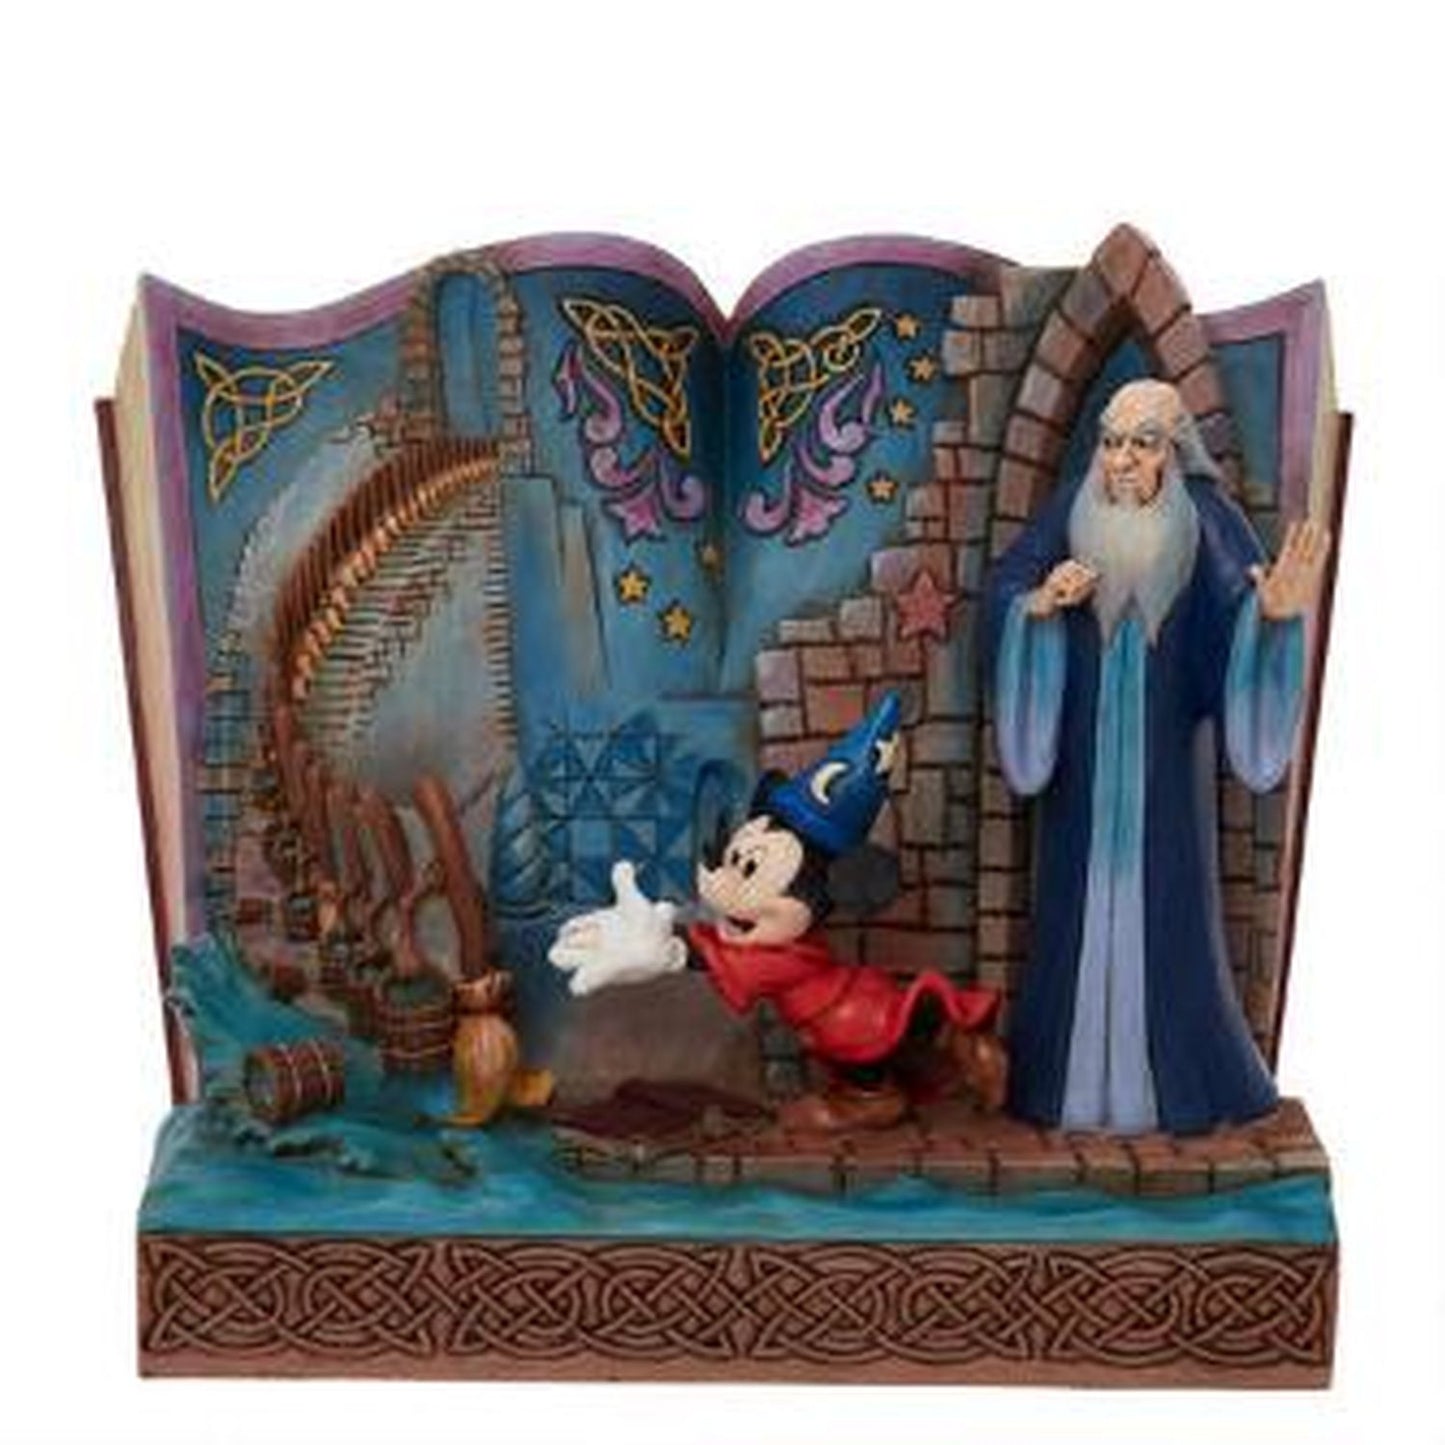 Enesco Disney Traditions Sorcerer Mickey Story Book Figurine